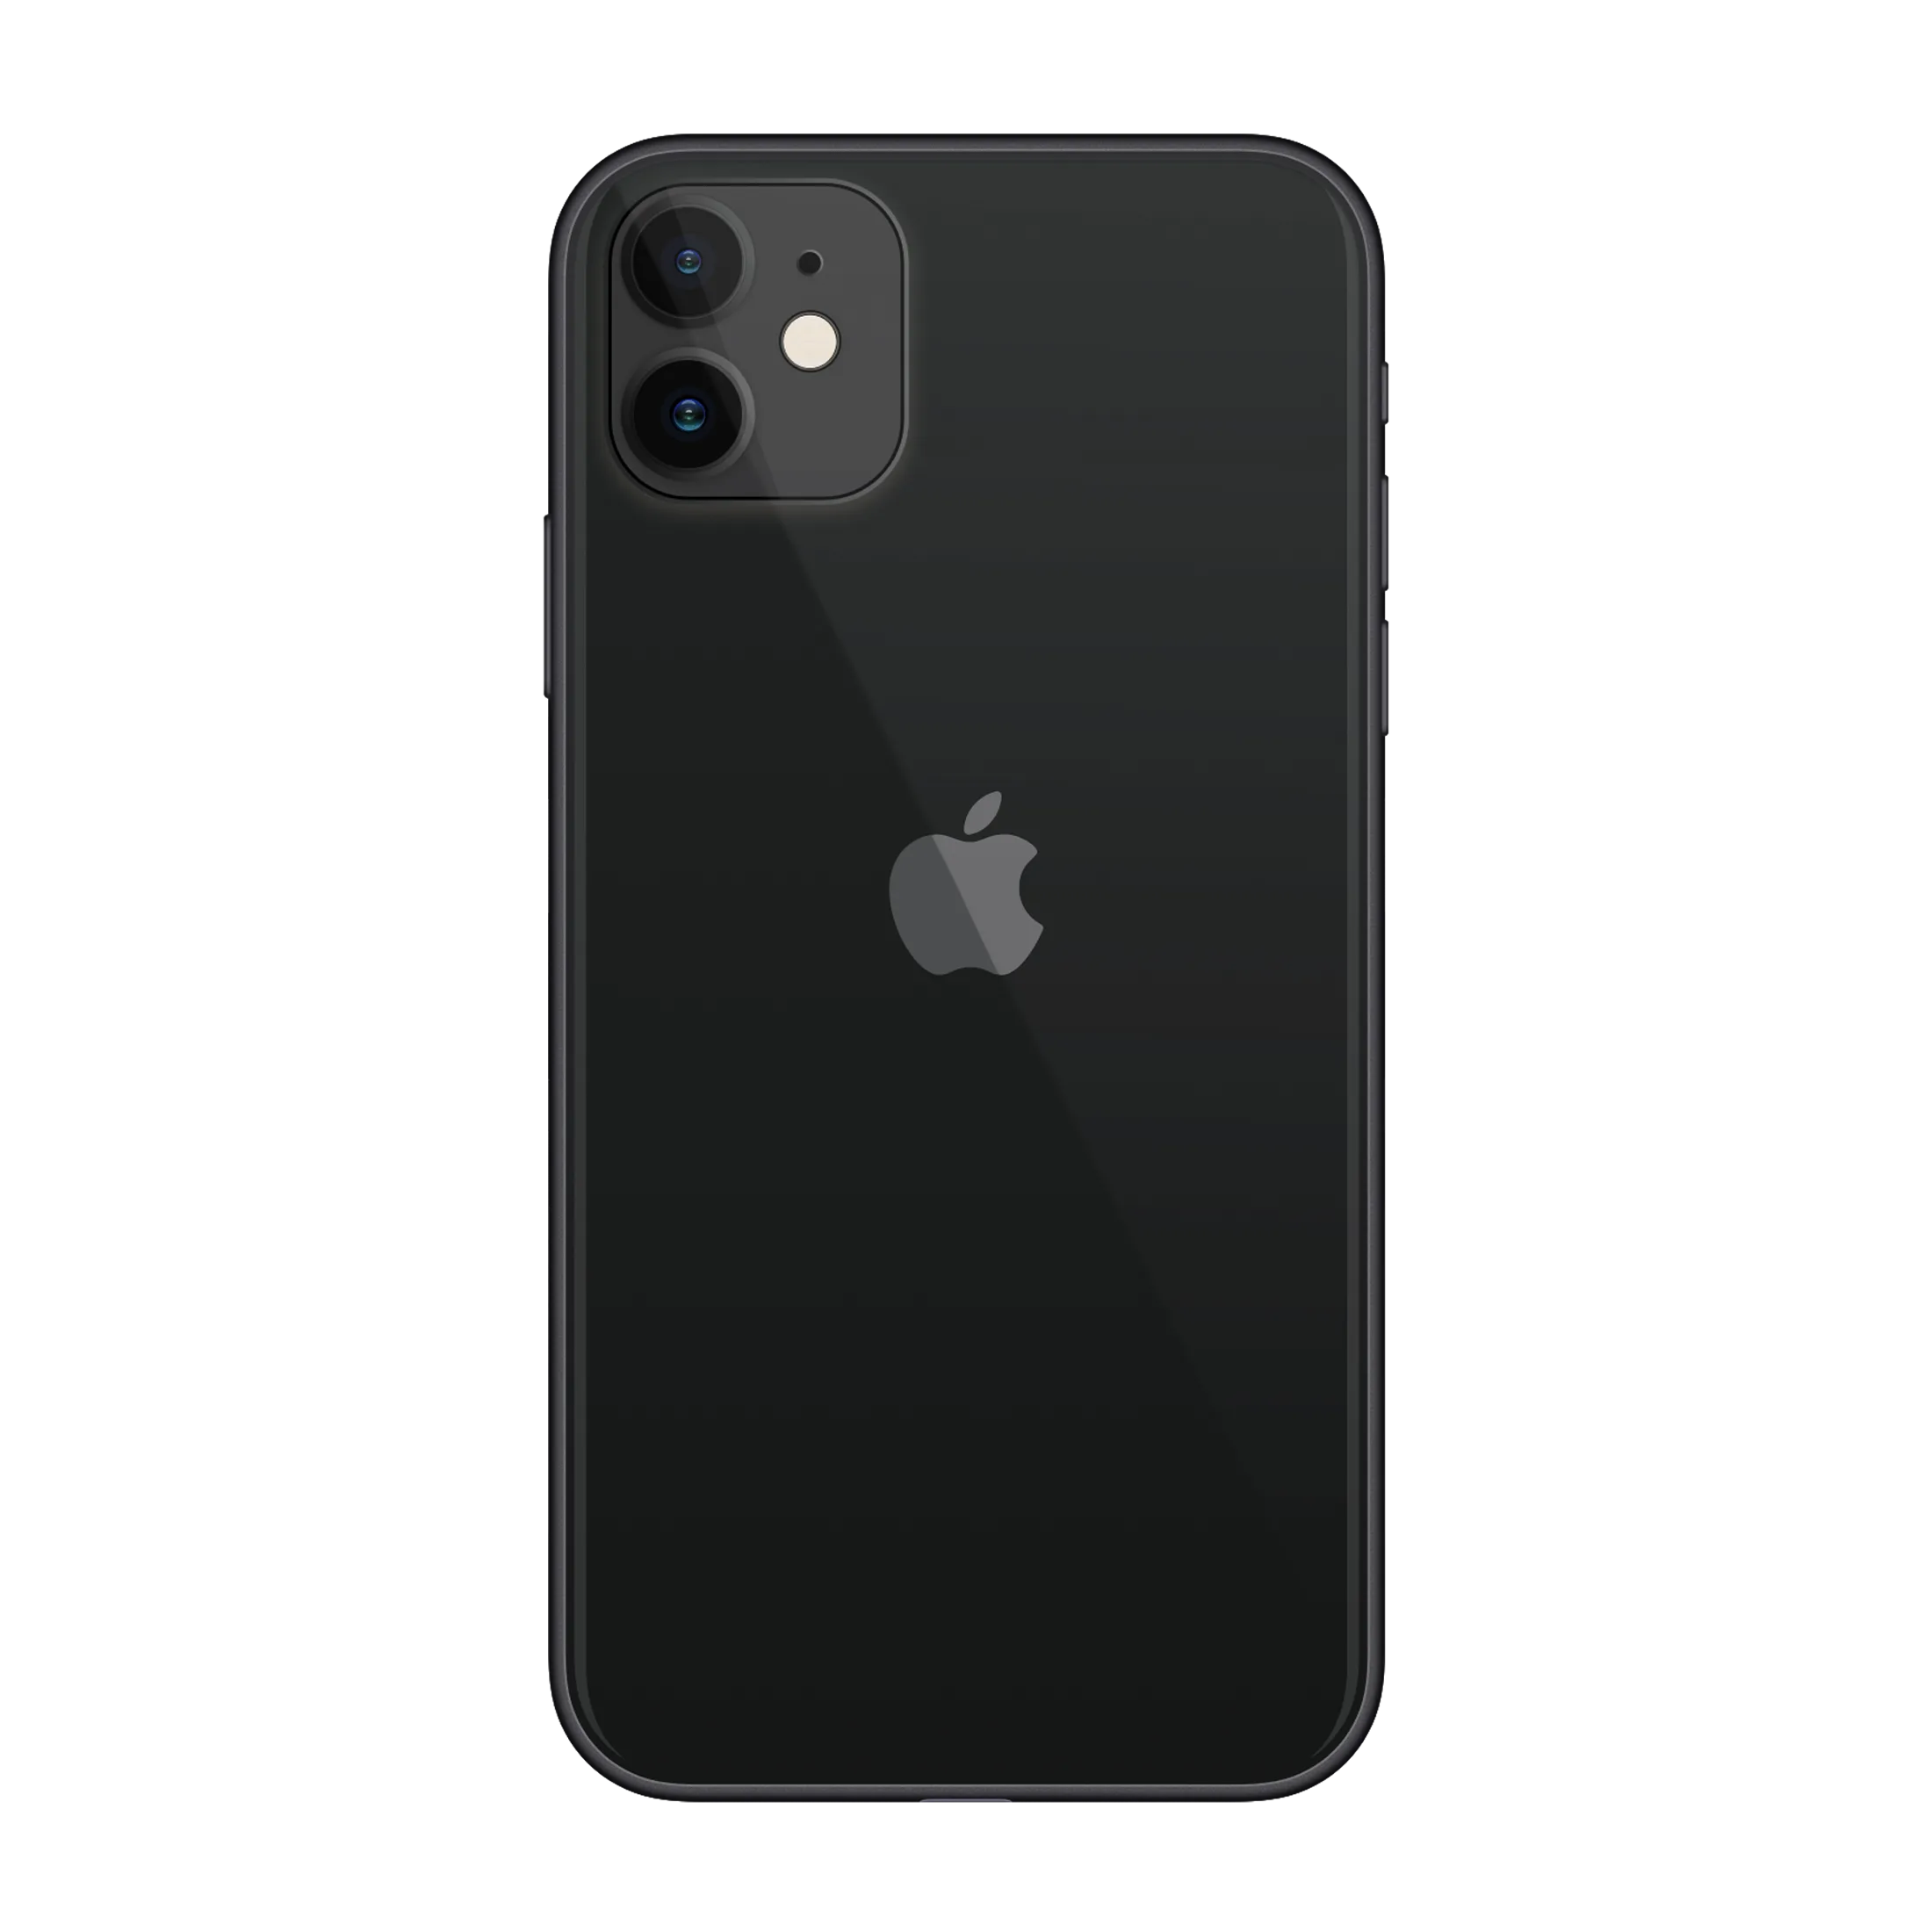 Айфон 11 томск. Apple iphone 11 64 ГБ черный. Apple iphone 11 64gb Black. Apple iphone 11 128gb Black. Iphone 11, 64 ГБ, чёрный.